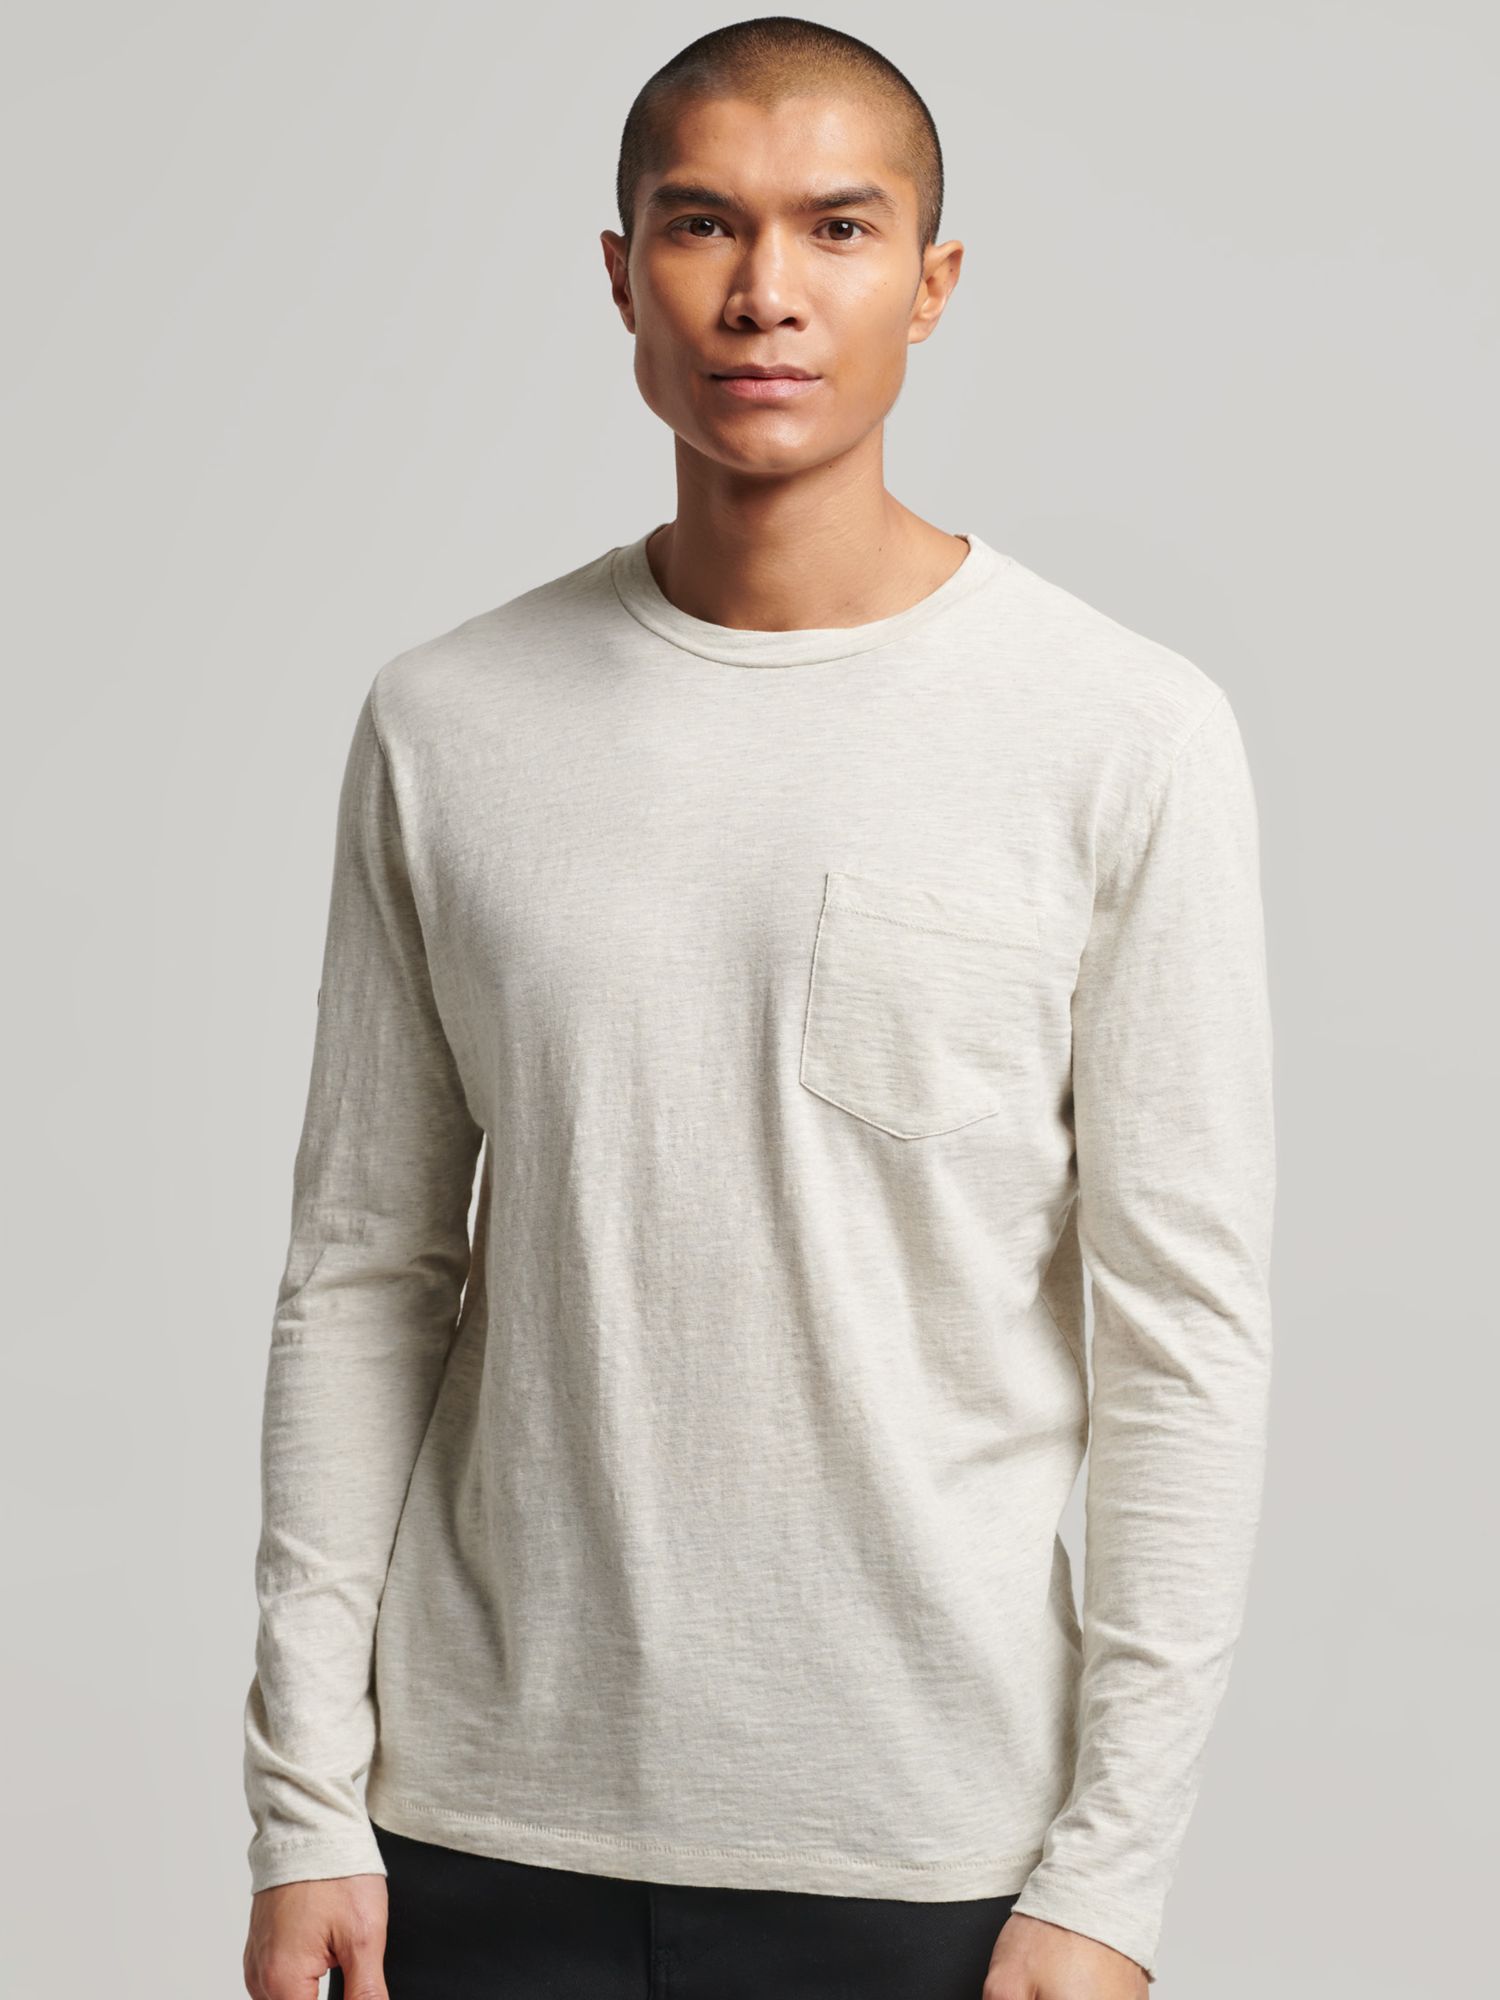 Men's T-Shirts - White, Sleeve: Long Sleeve | John Lewis & Partners